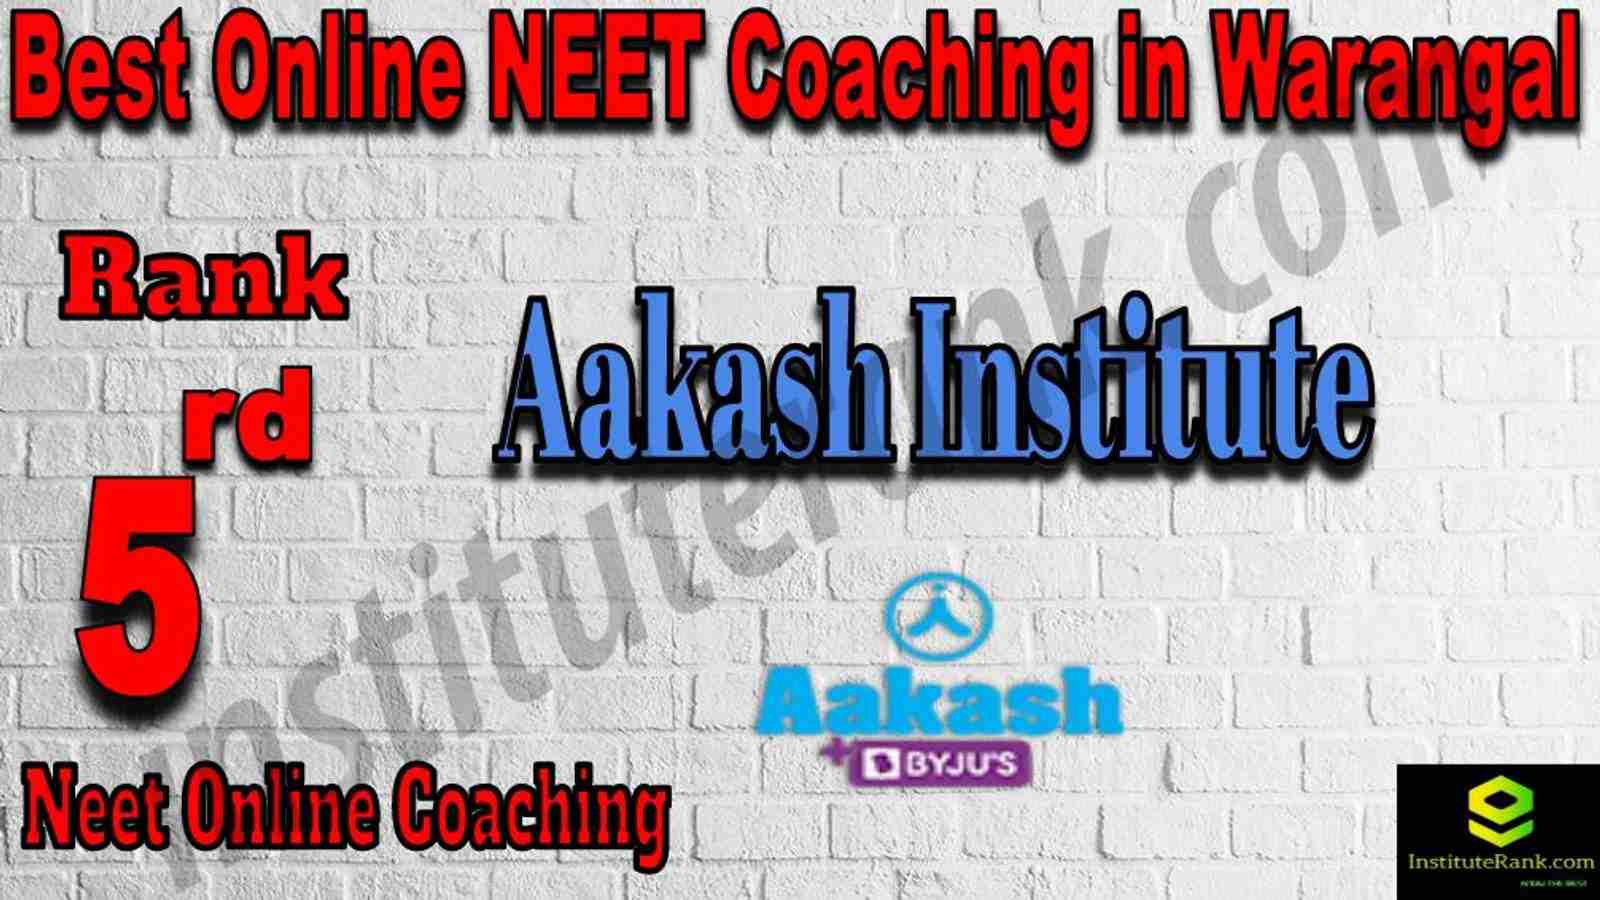 5th Best Online Neet Coaching in Warangal